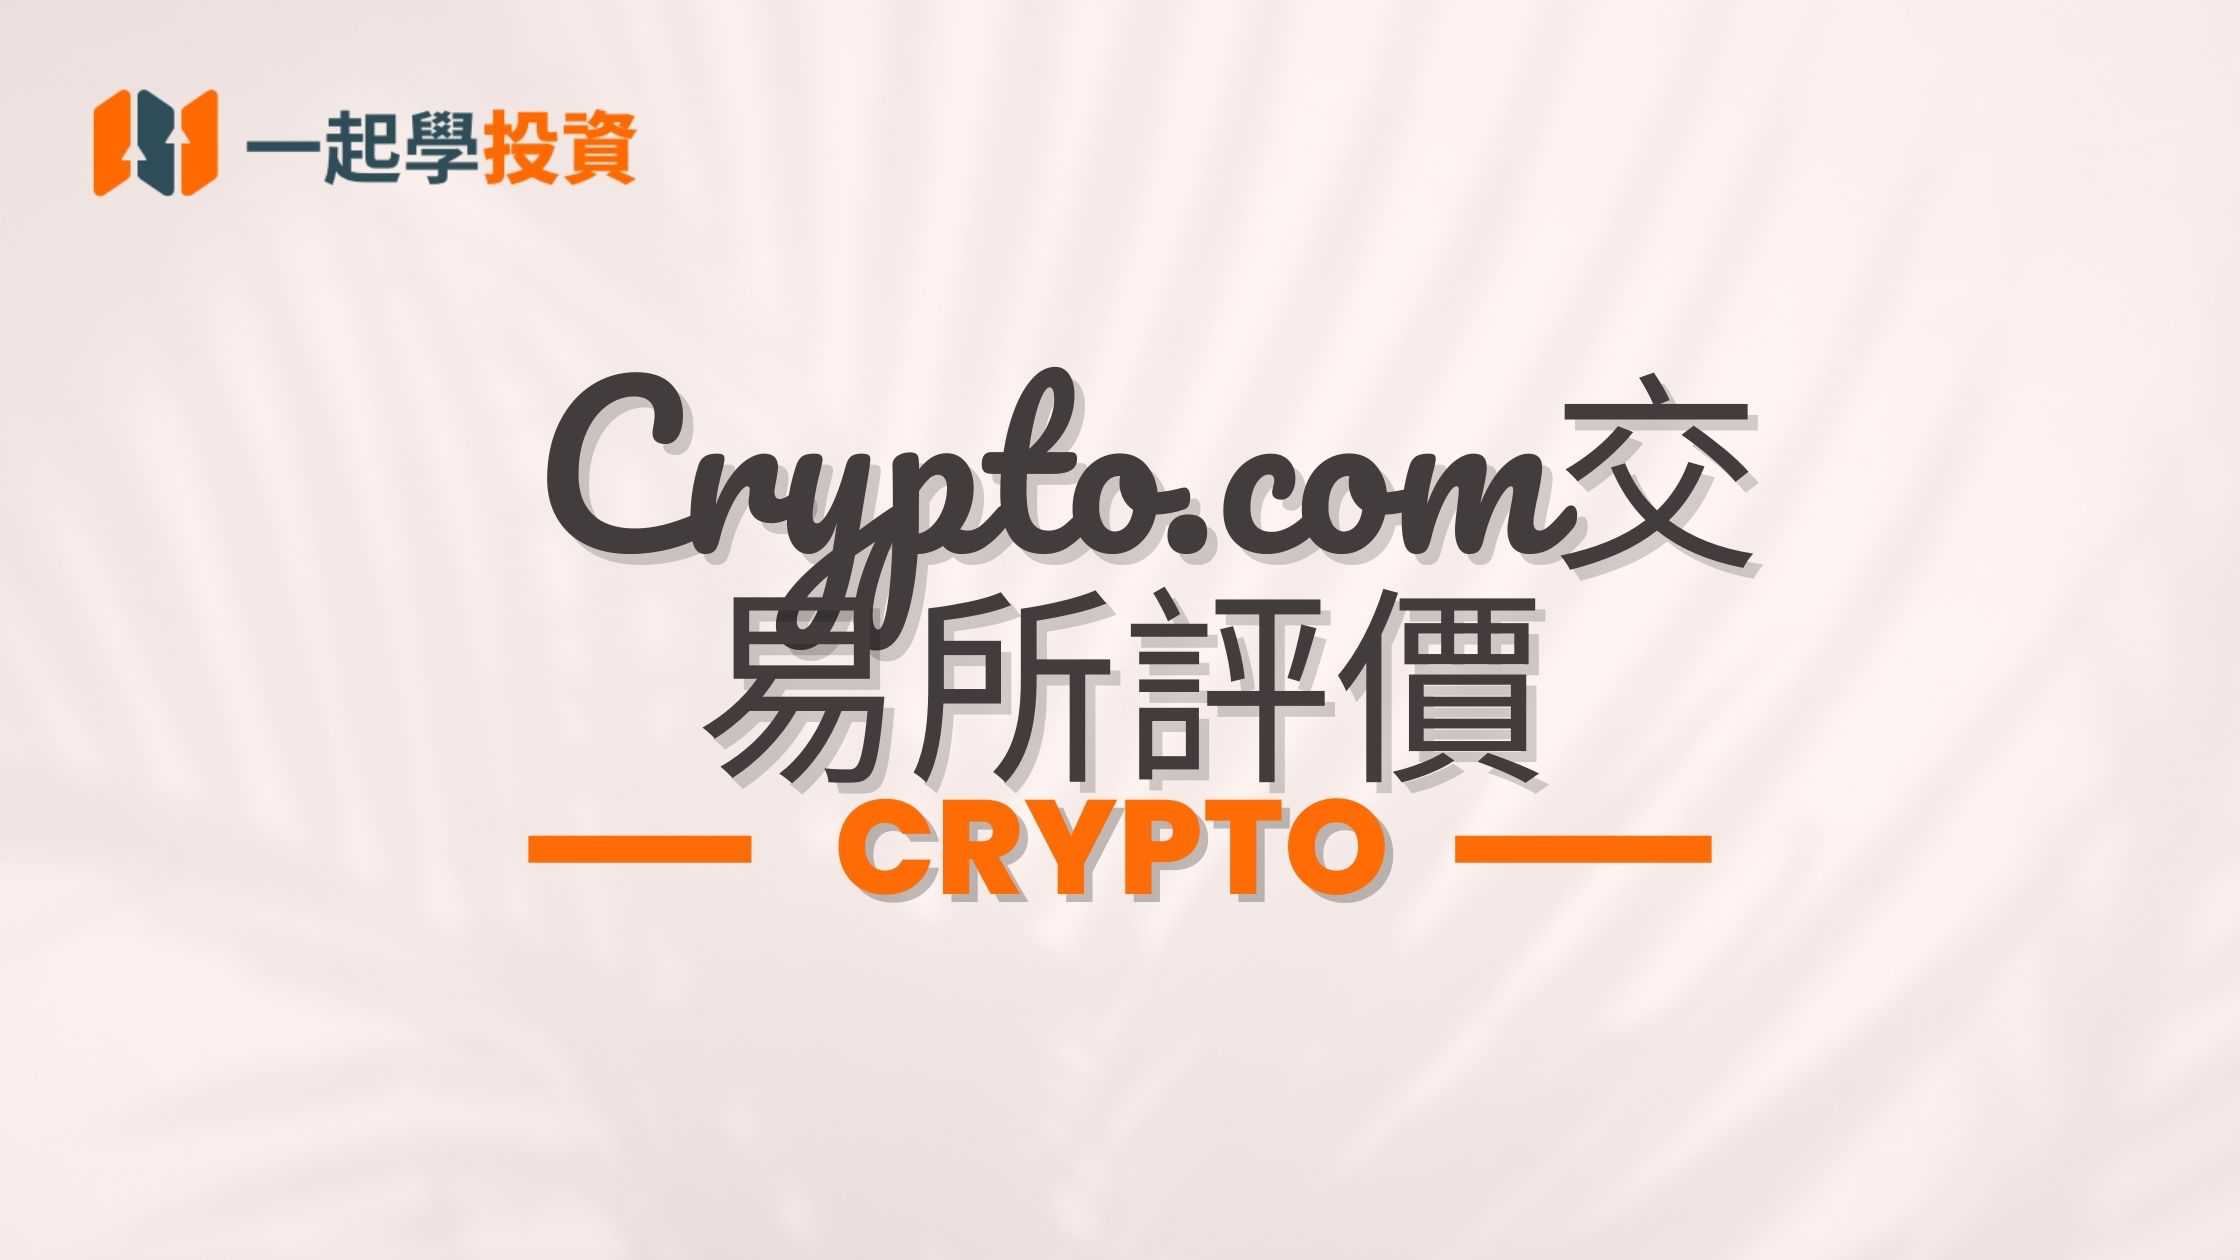 Crypto.com Exchange 交易所評價：Crypto.com是詐騙嗎？功能、安全、手續費實測體驗（附台灣PTT 網友評價）